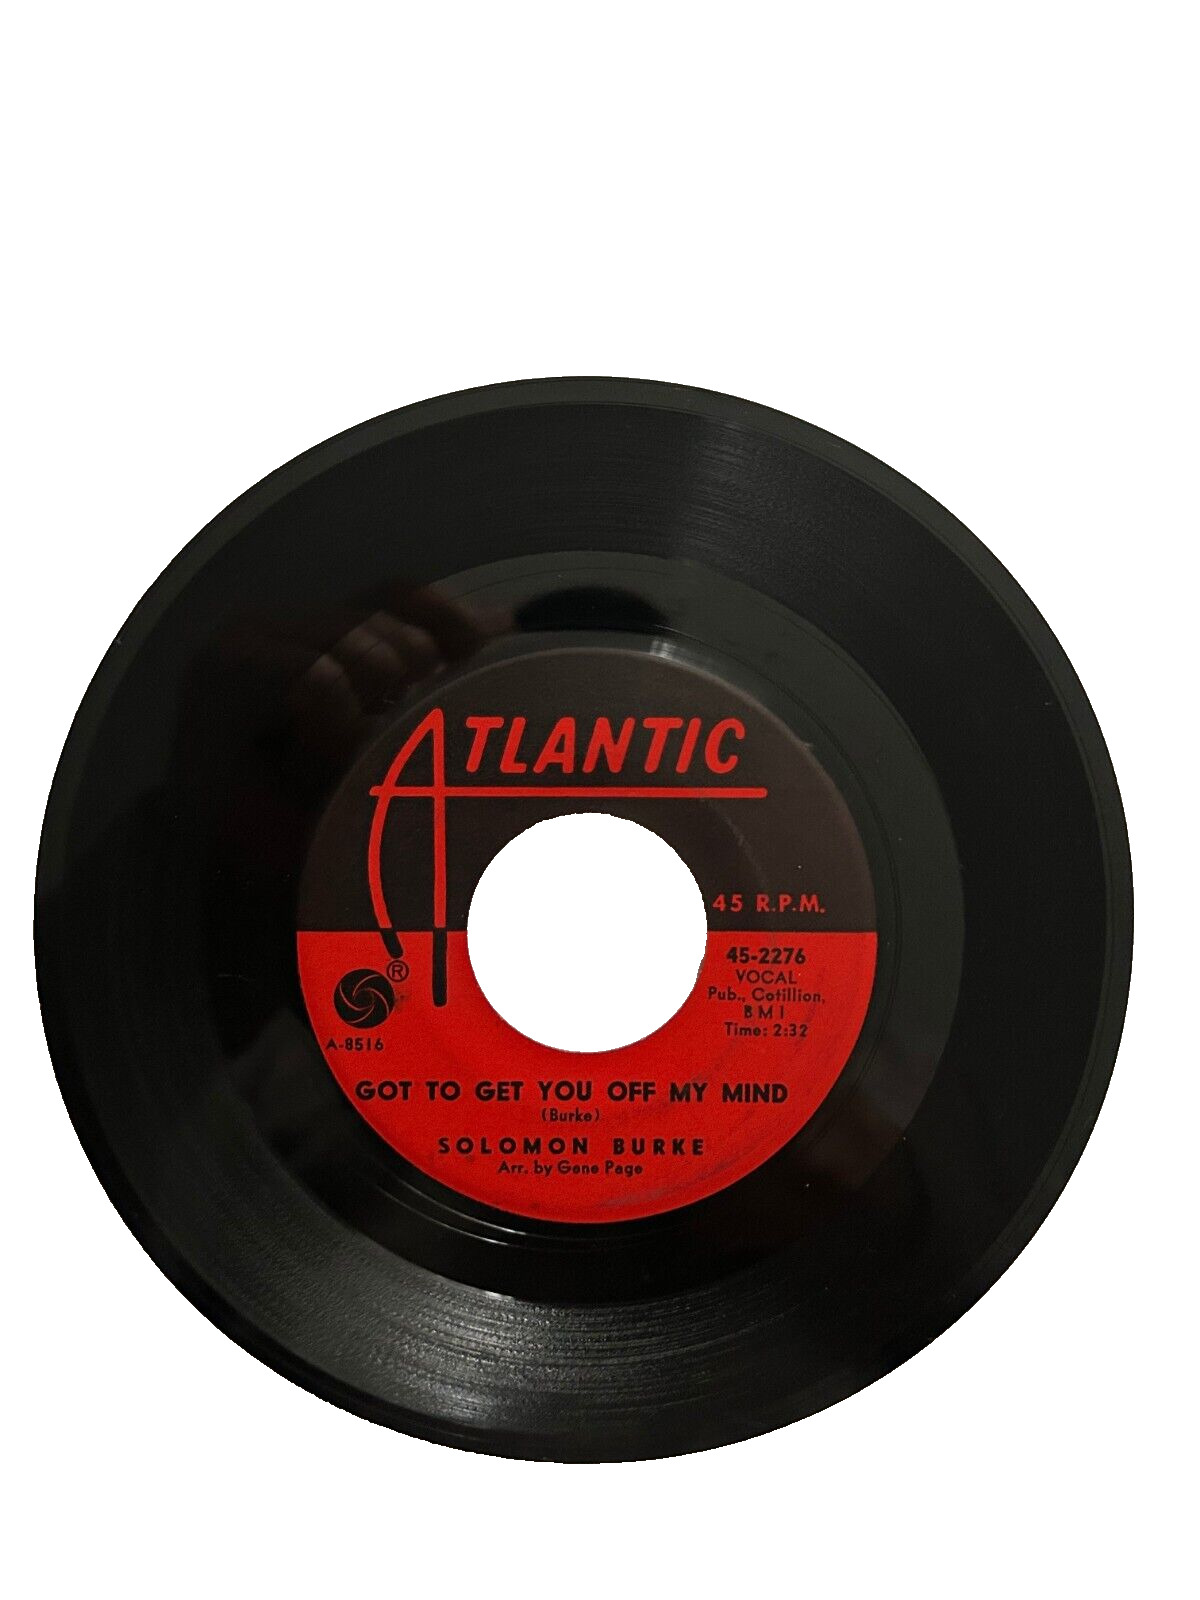 Solomon Burke "Got To Get You Off My Mind" Peepin" N. Soul R&B 45 RPM Record VG+